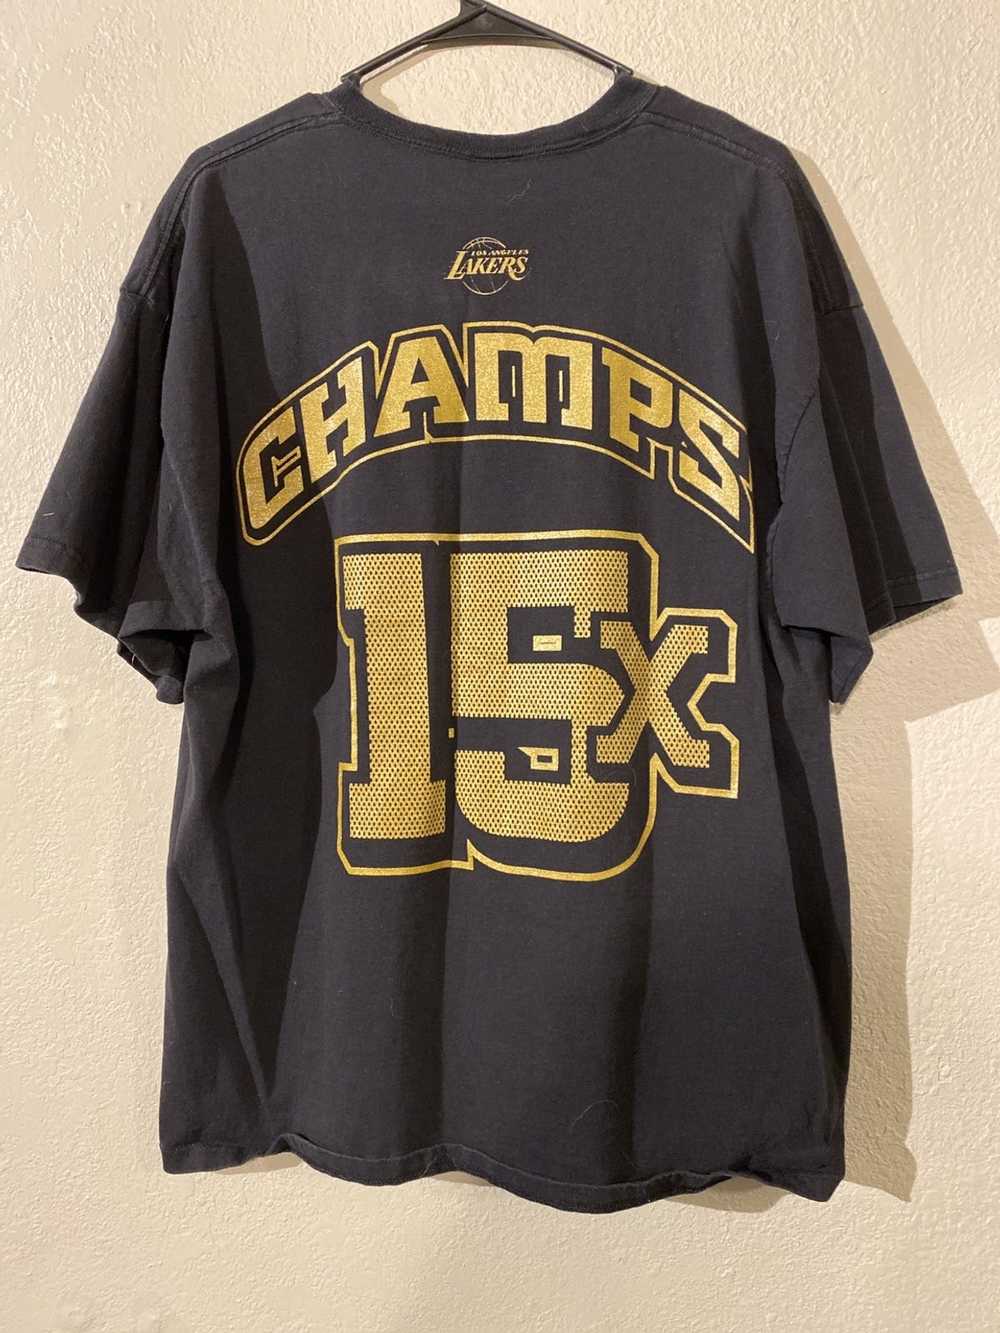 Los Angeles Lakers NBA Basketball Shirt #32 Johnson (Very good) XS